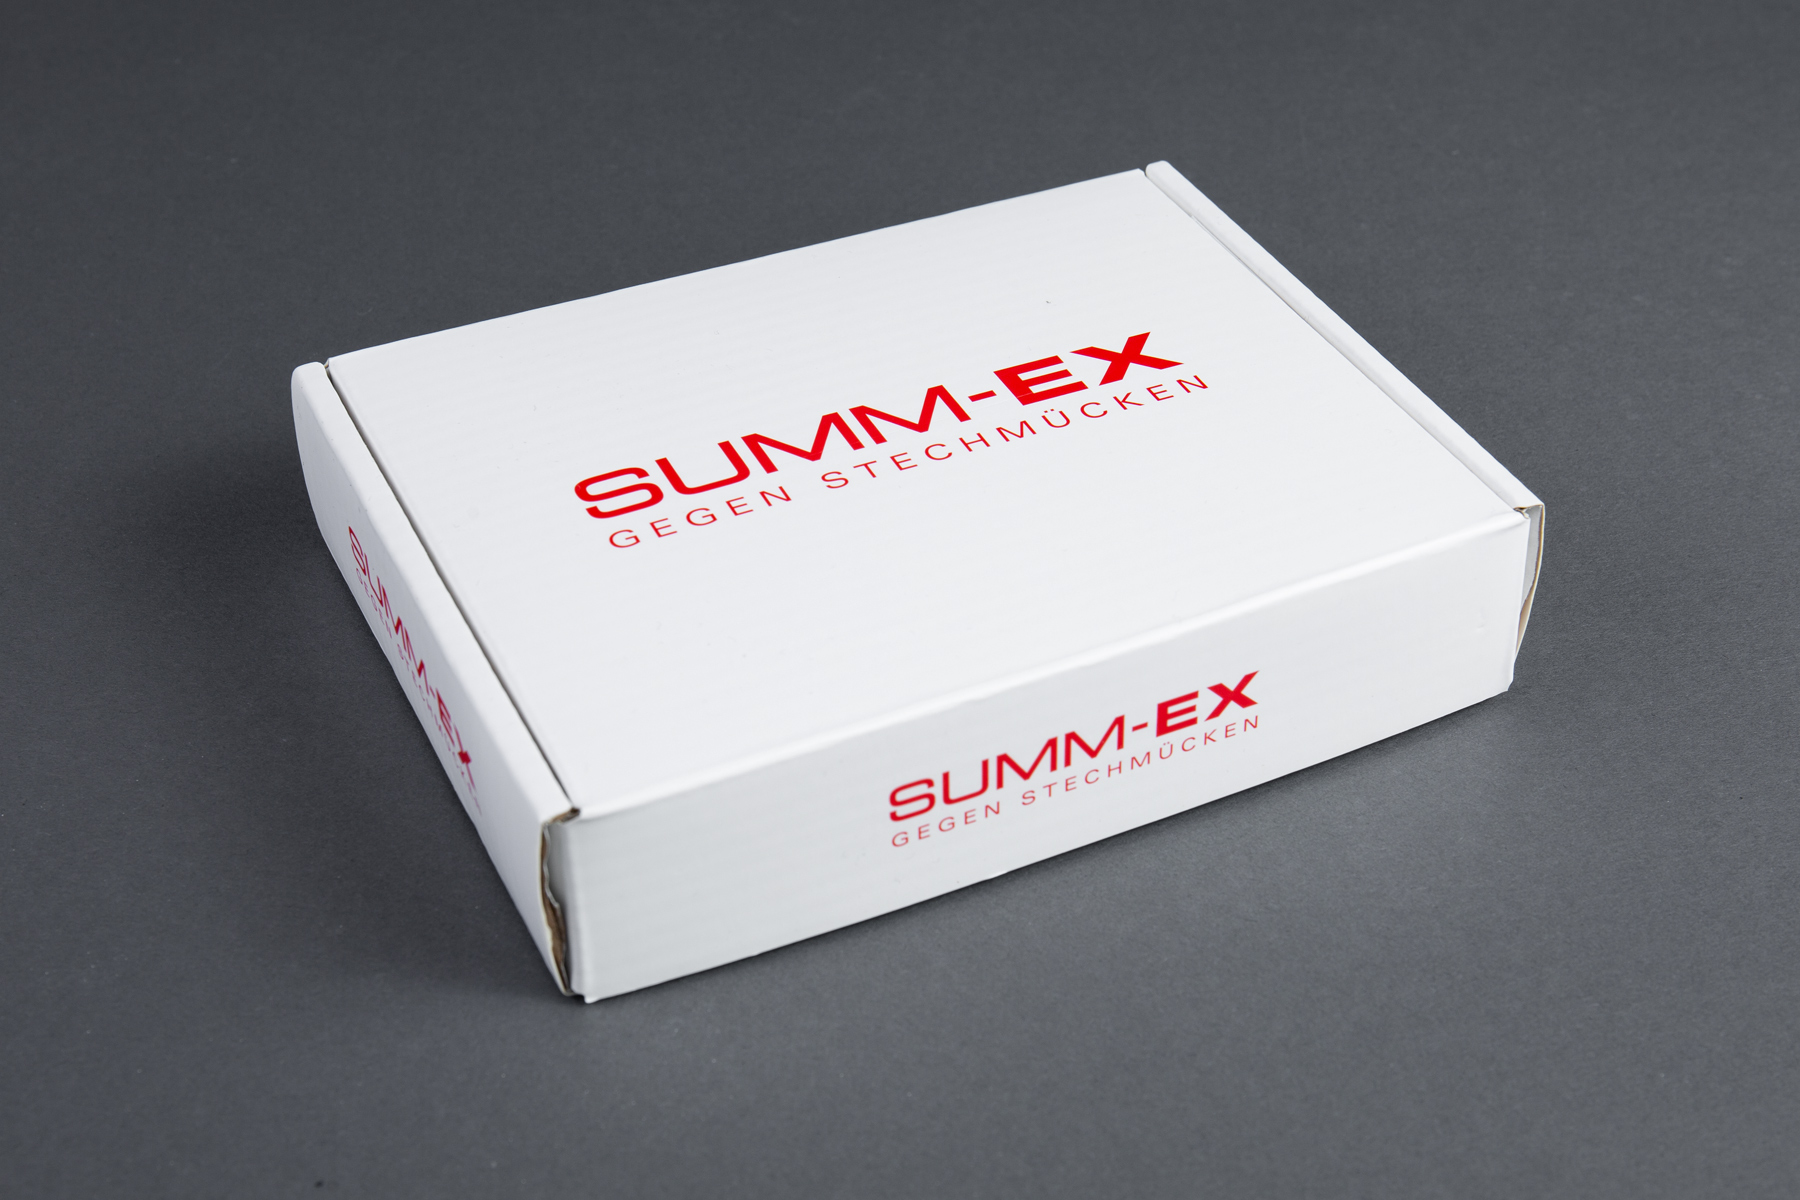 SUMM-EX Verpackung